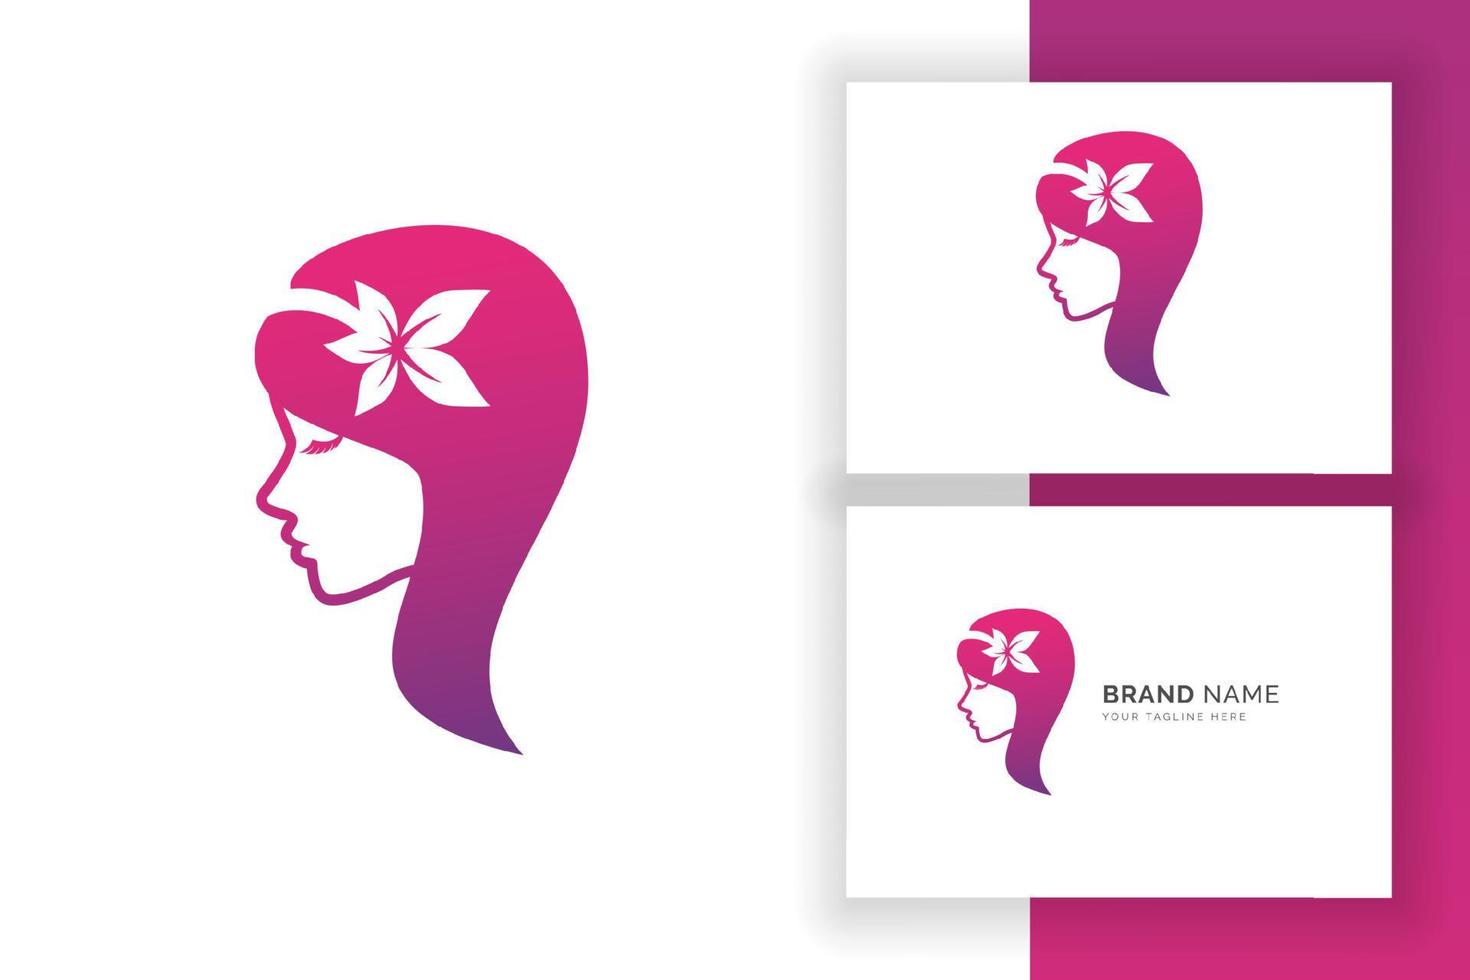 beauty woman head silhouette logo design template vector